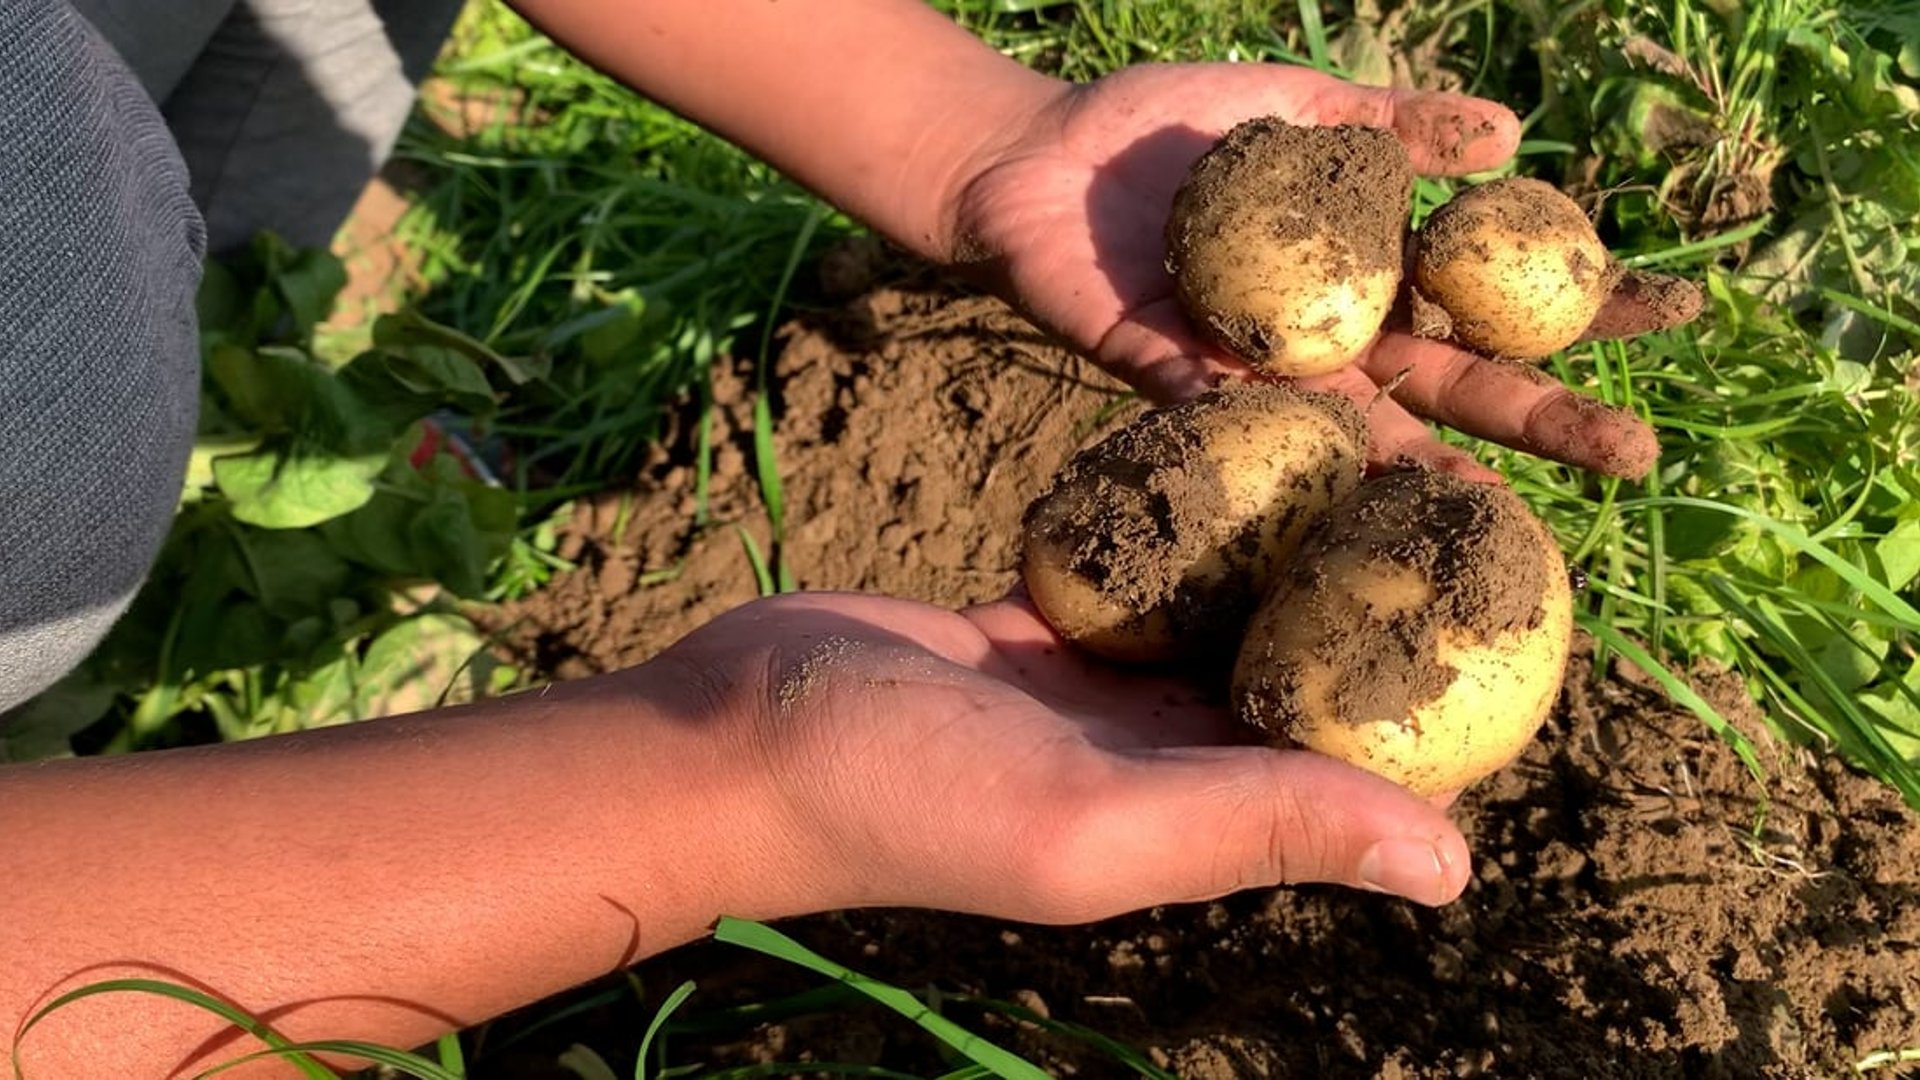 Video Potato farmers in Abu Ghraib face economic challenges despite high production